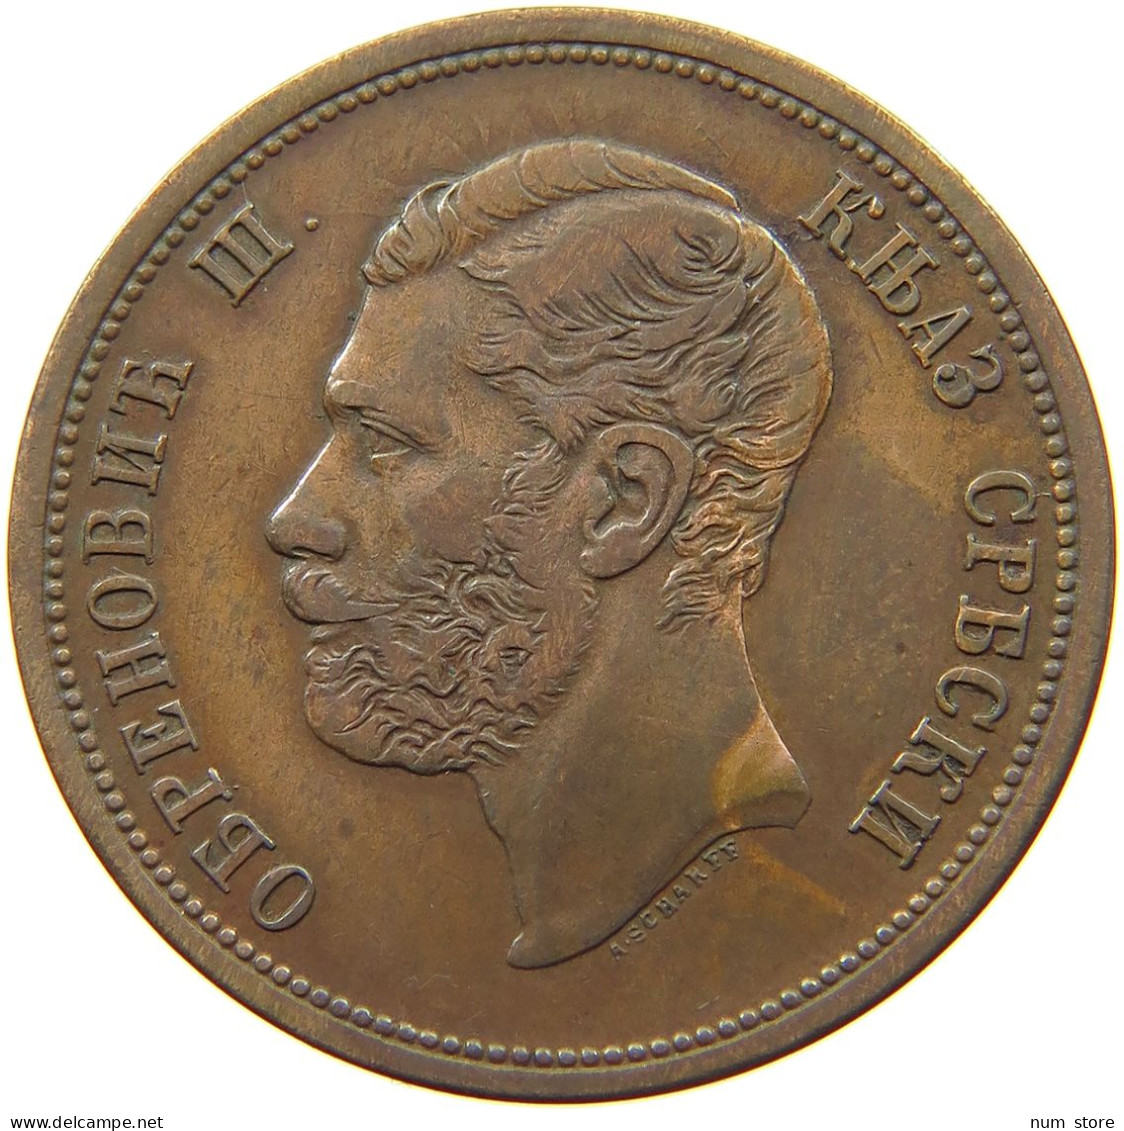 SERBIA 10 PARA 1868 Milan Obrenovich III. 10 PARA 1868 COIN ROTATION #t125 0561 - Serbie